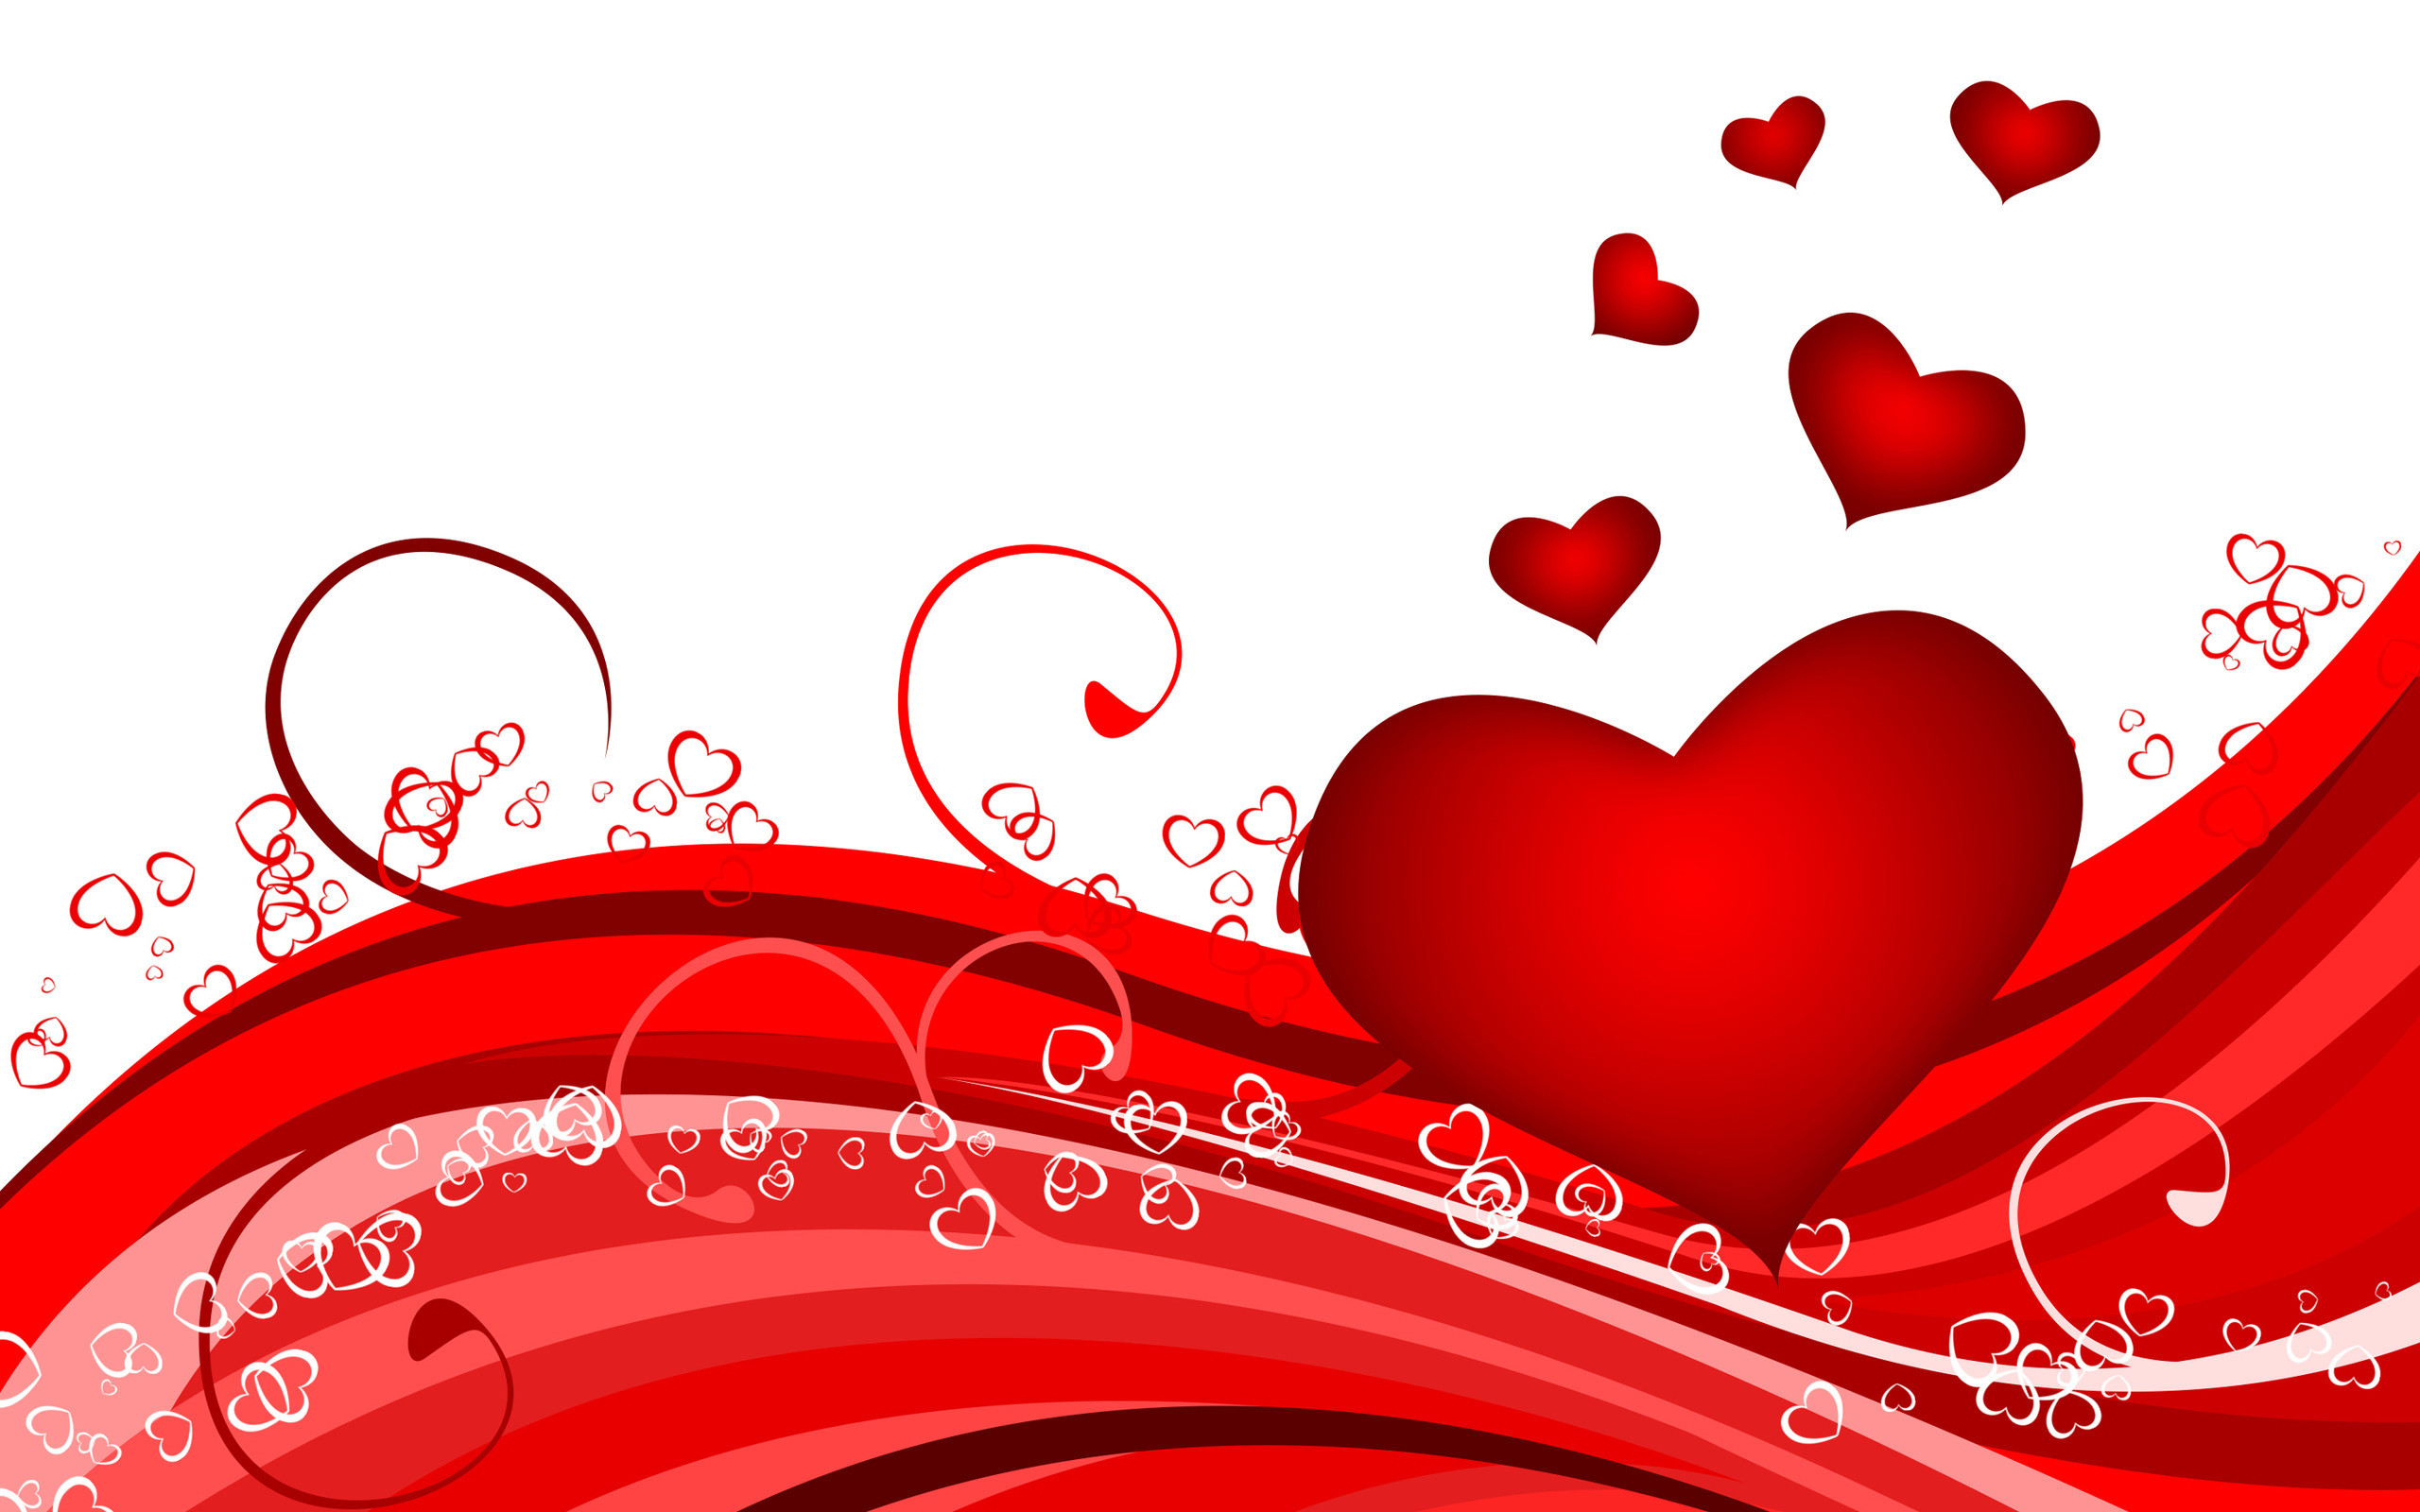 Microsoft Valentines Day Wallpaper Image